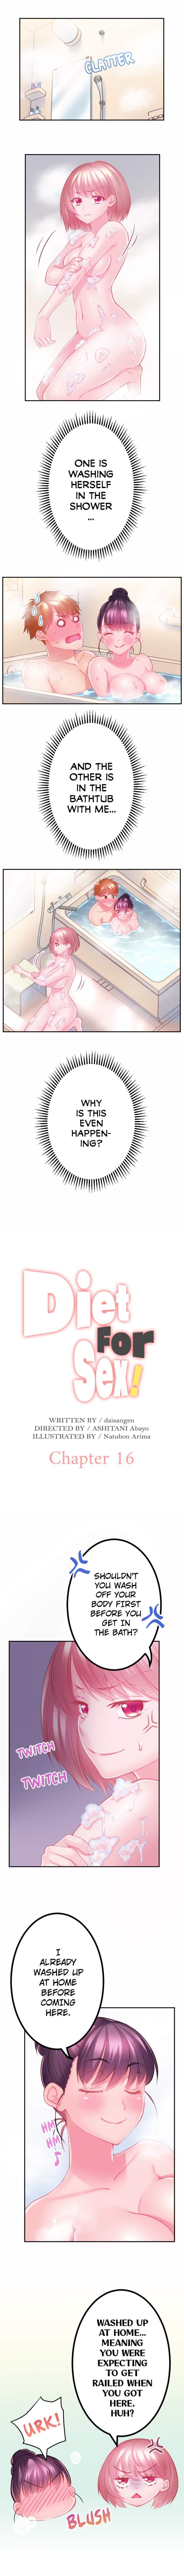 Diet For Sex! 174